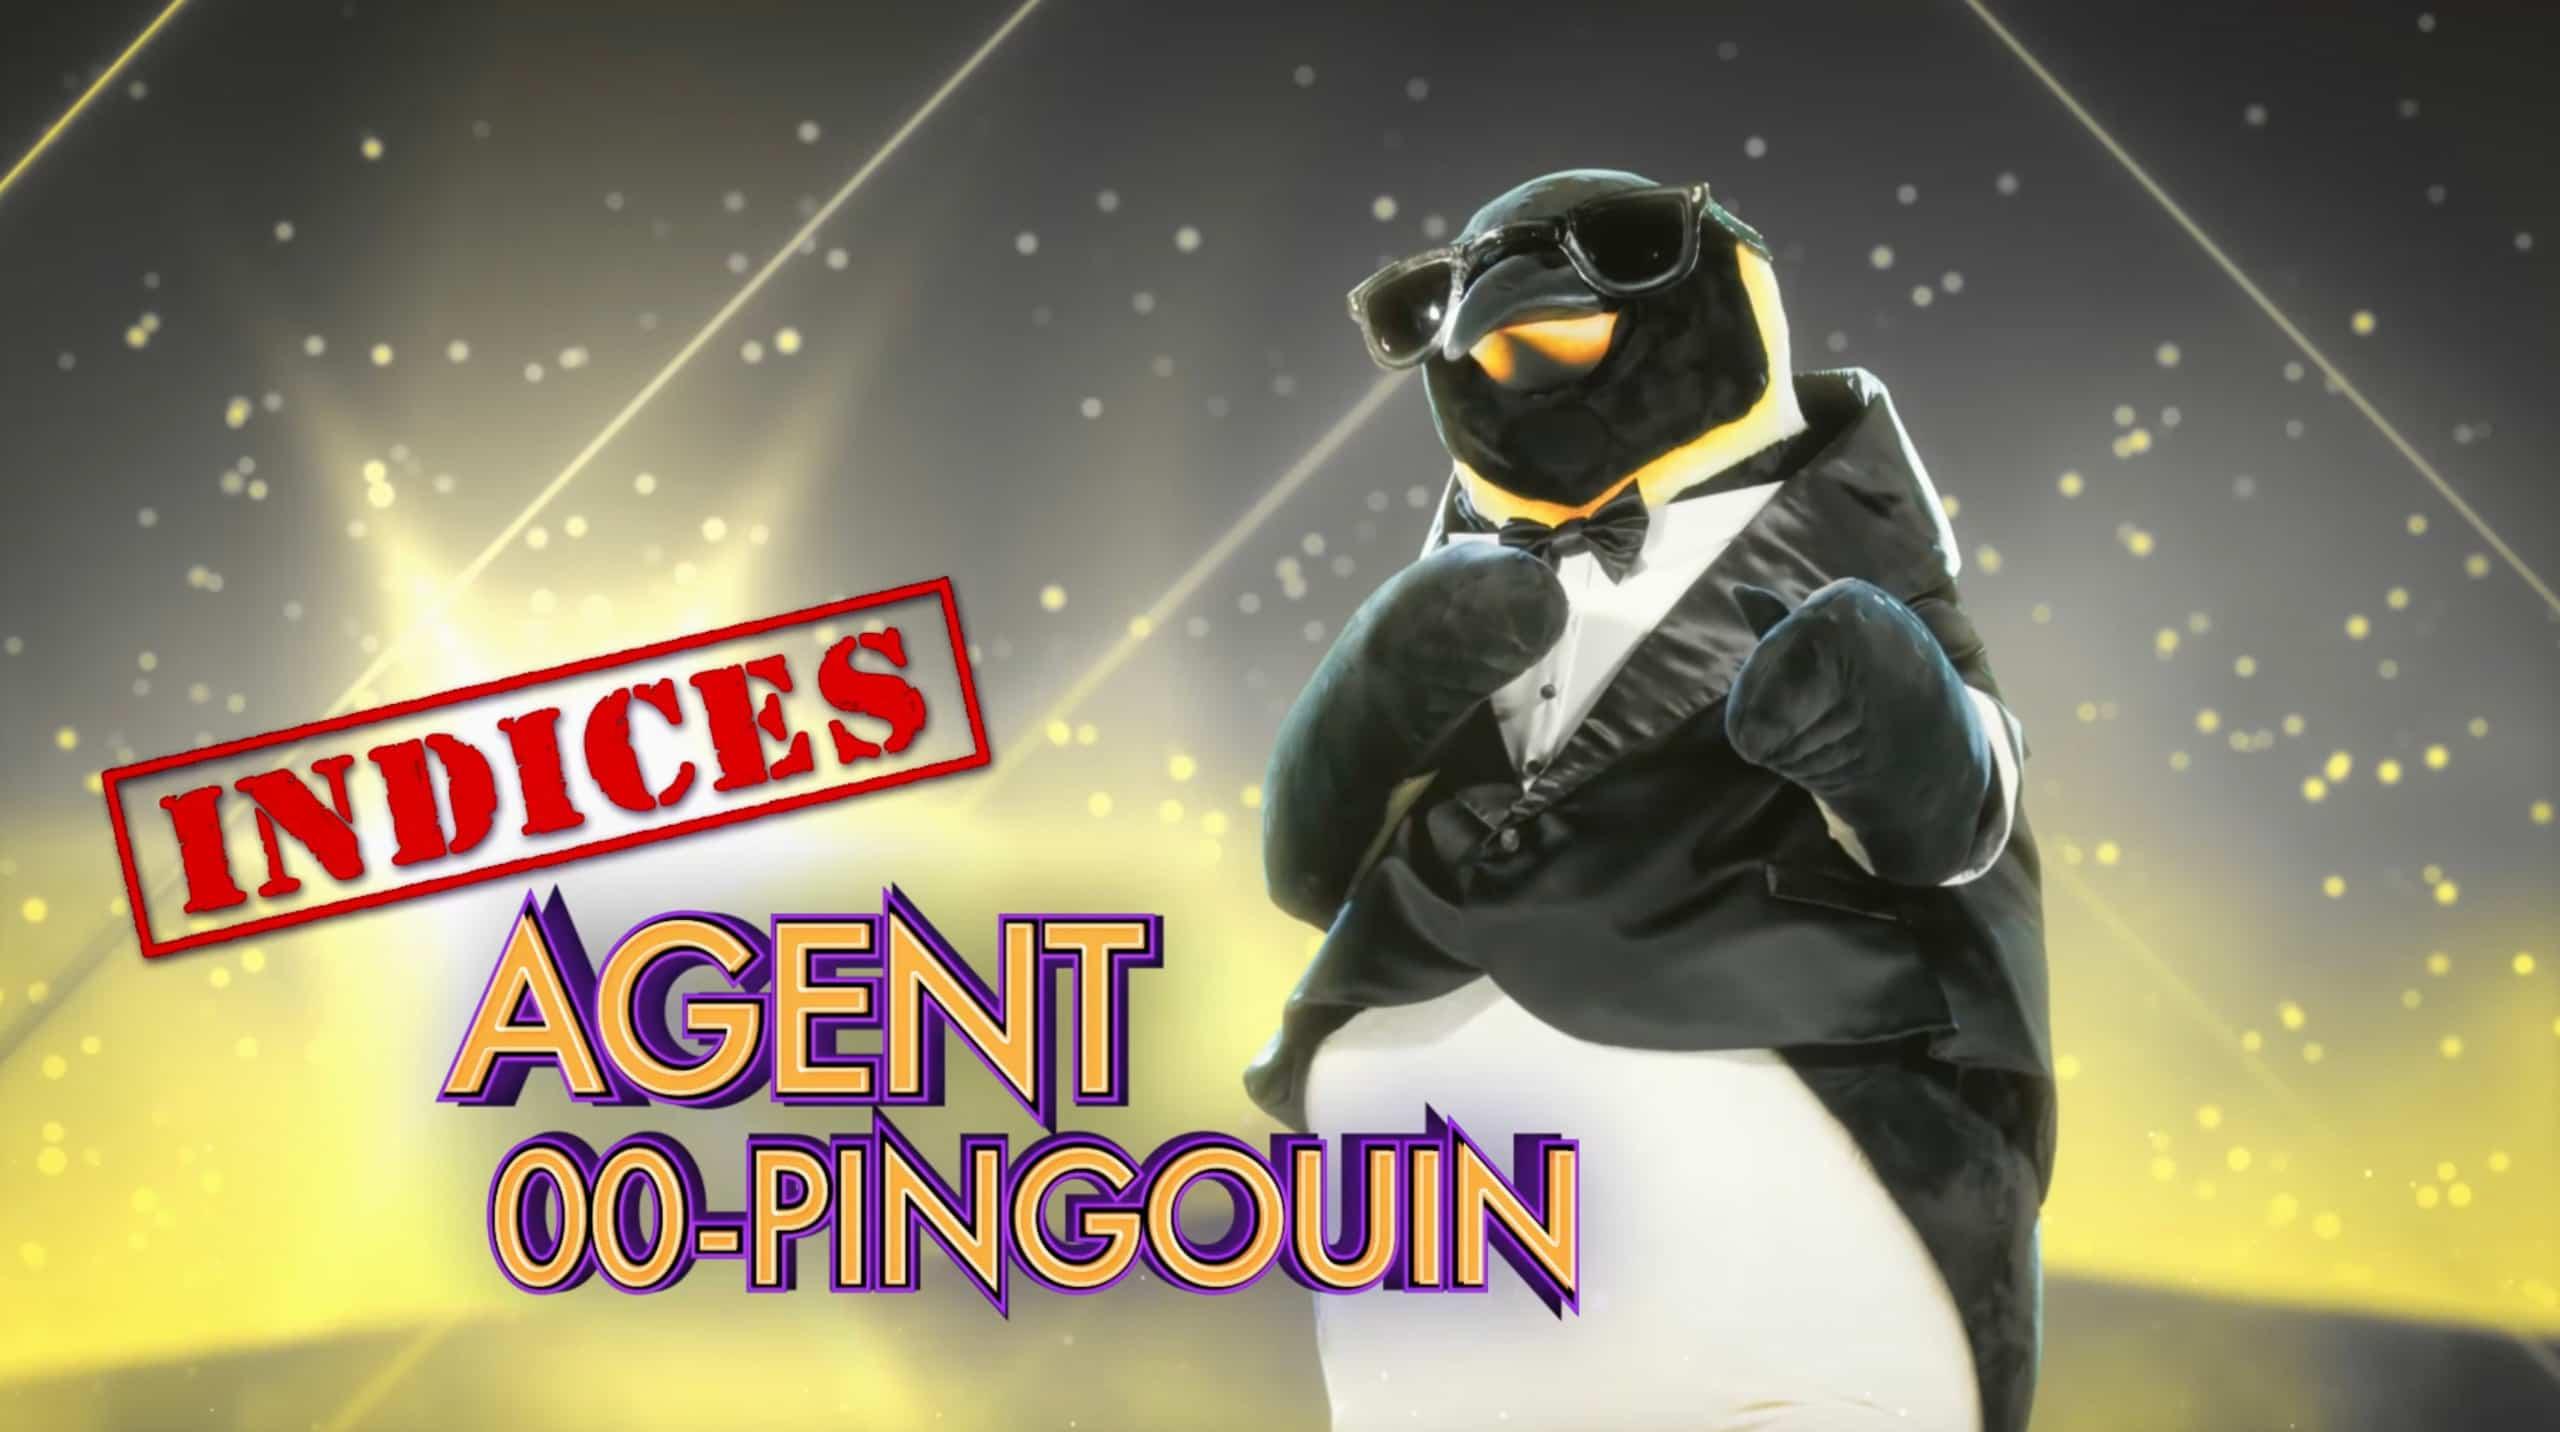 Agent 00-Pingouin - Indices 2